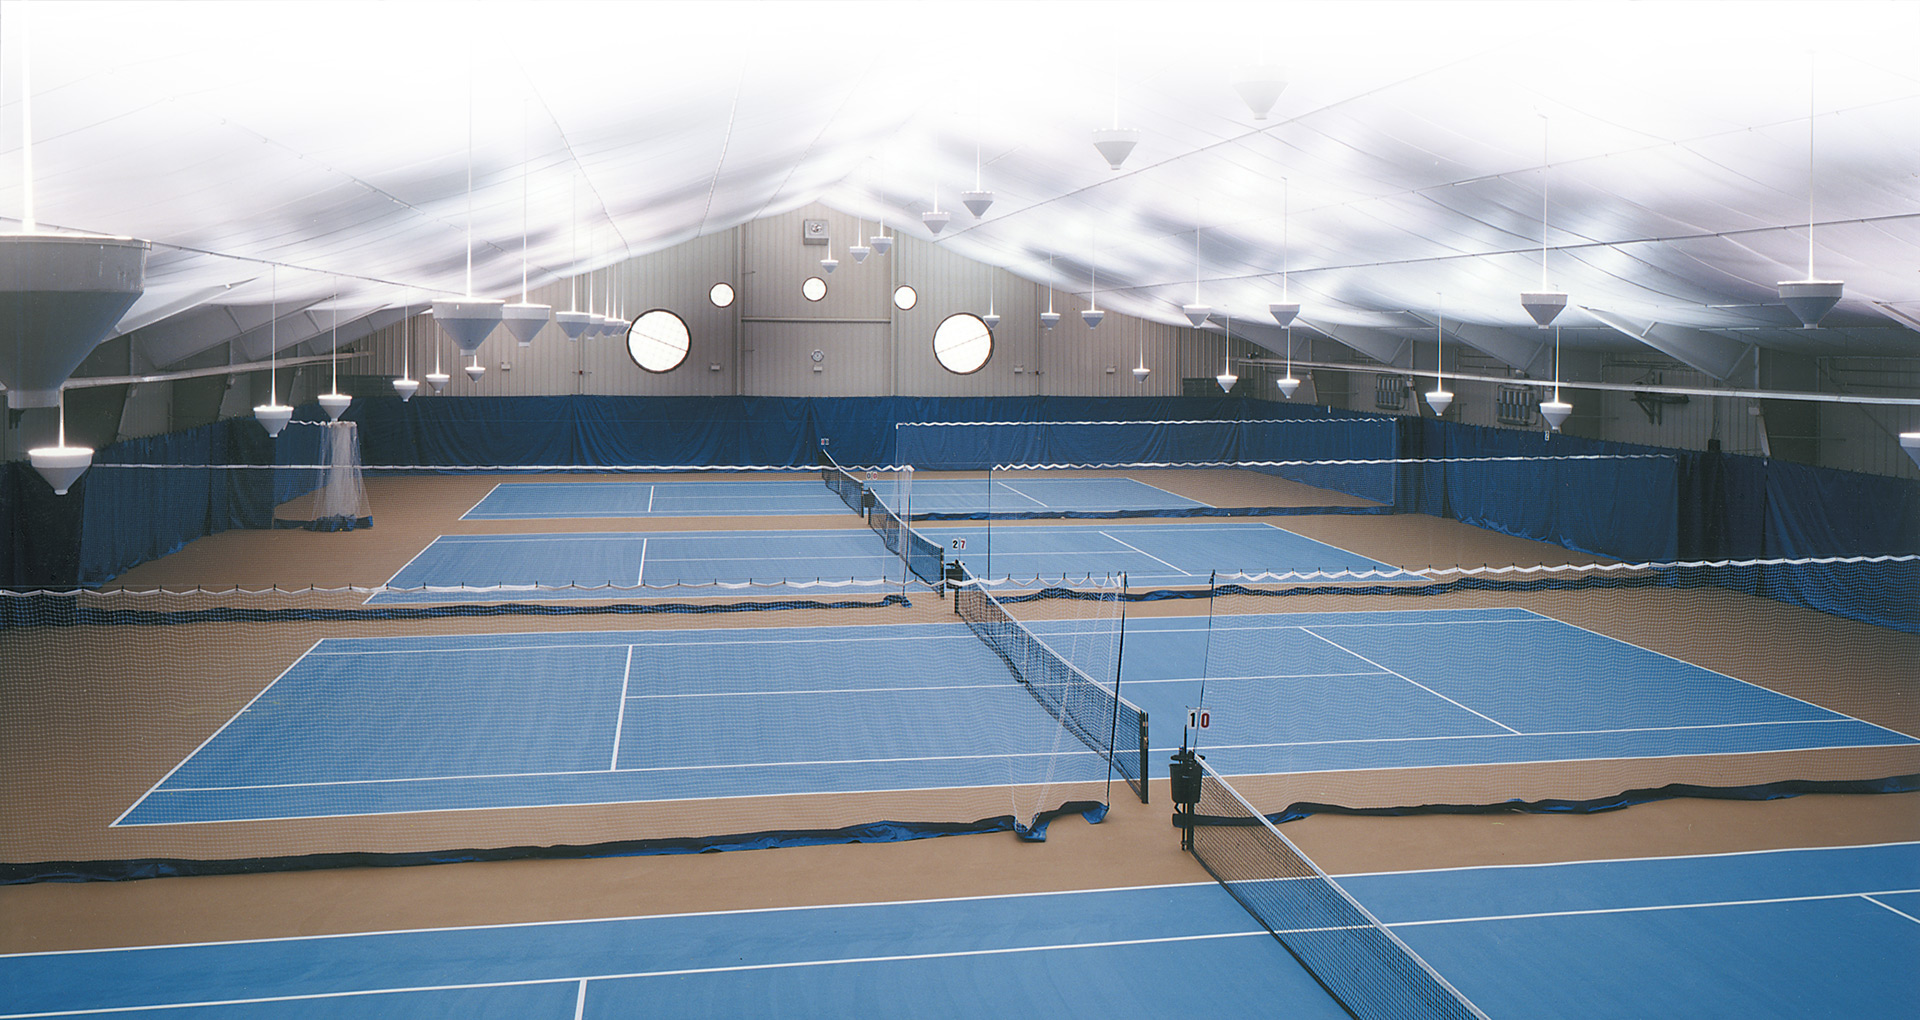 South Regency Tennis Center